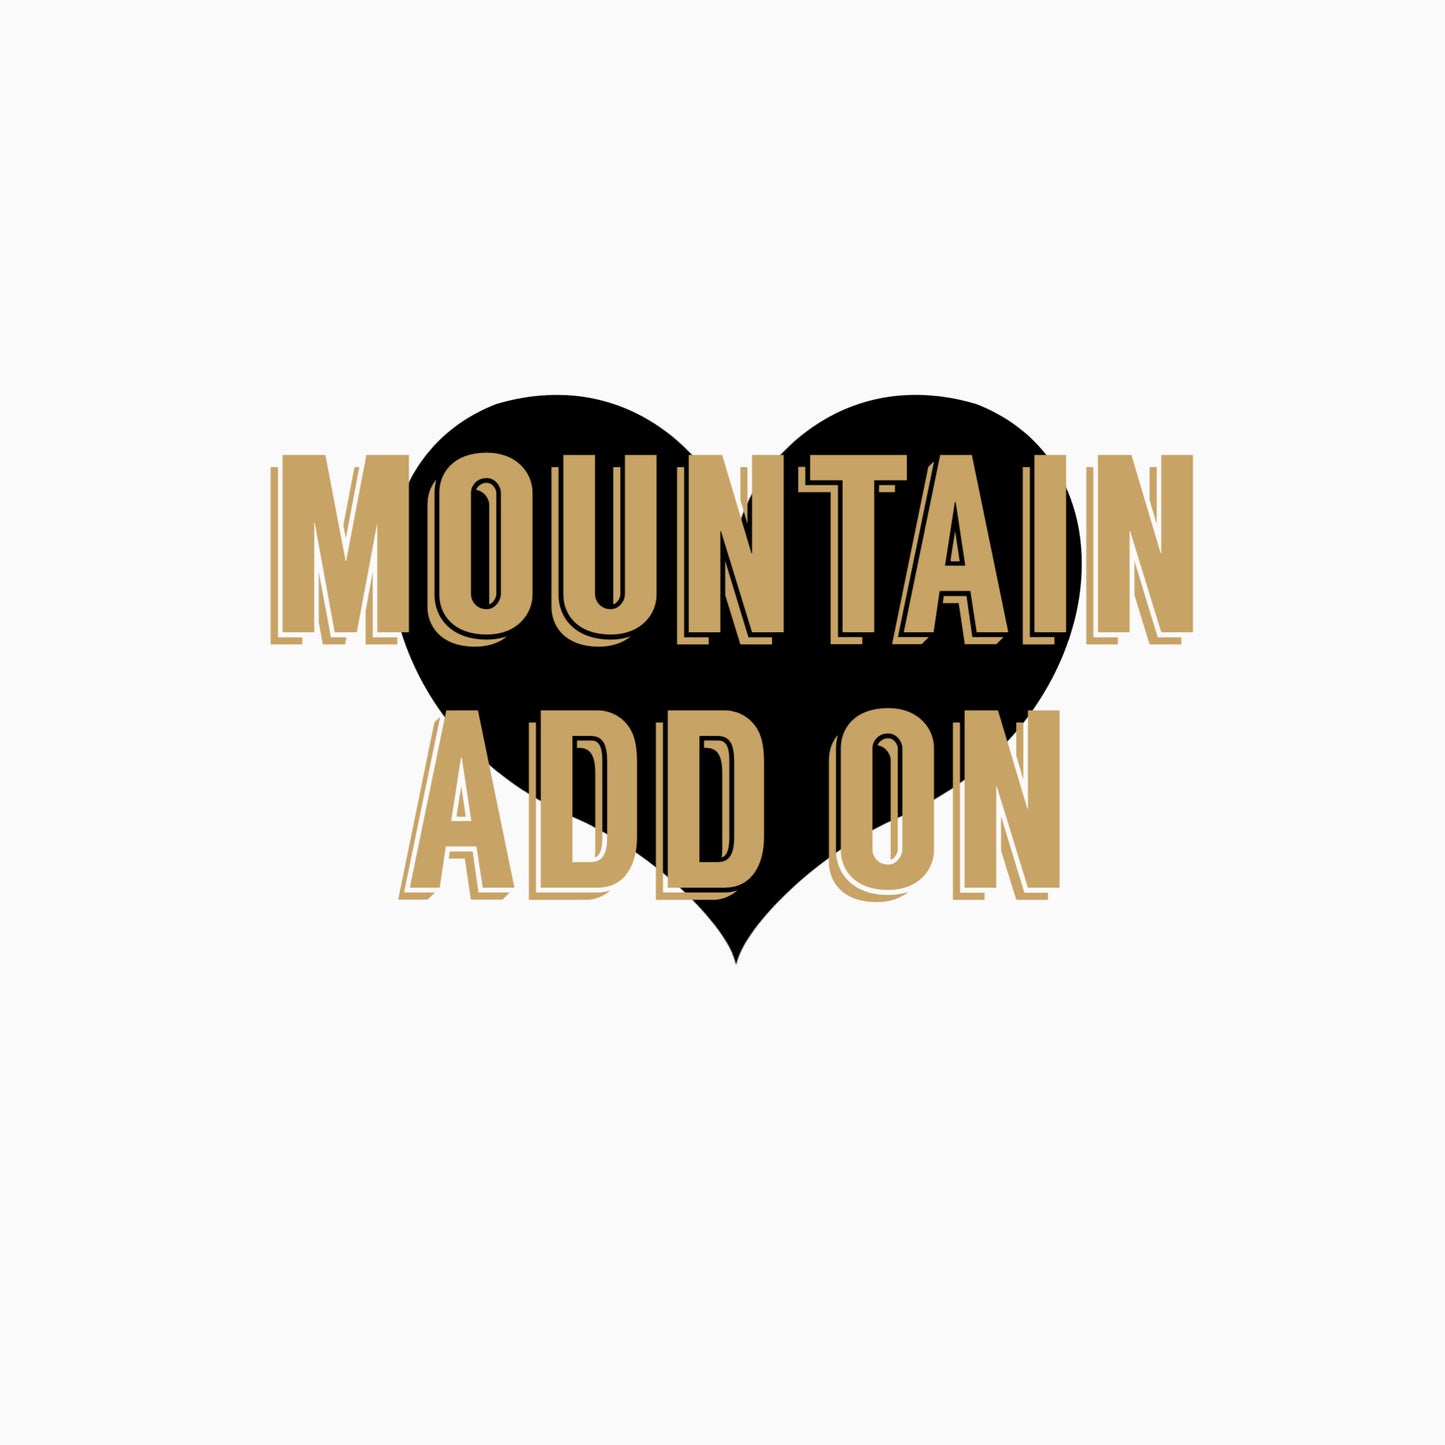 Mountain add on